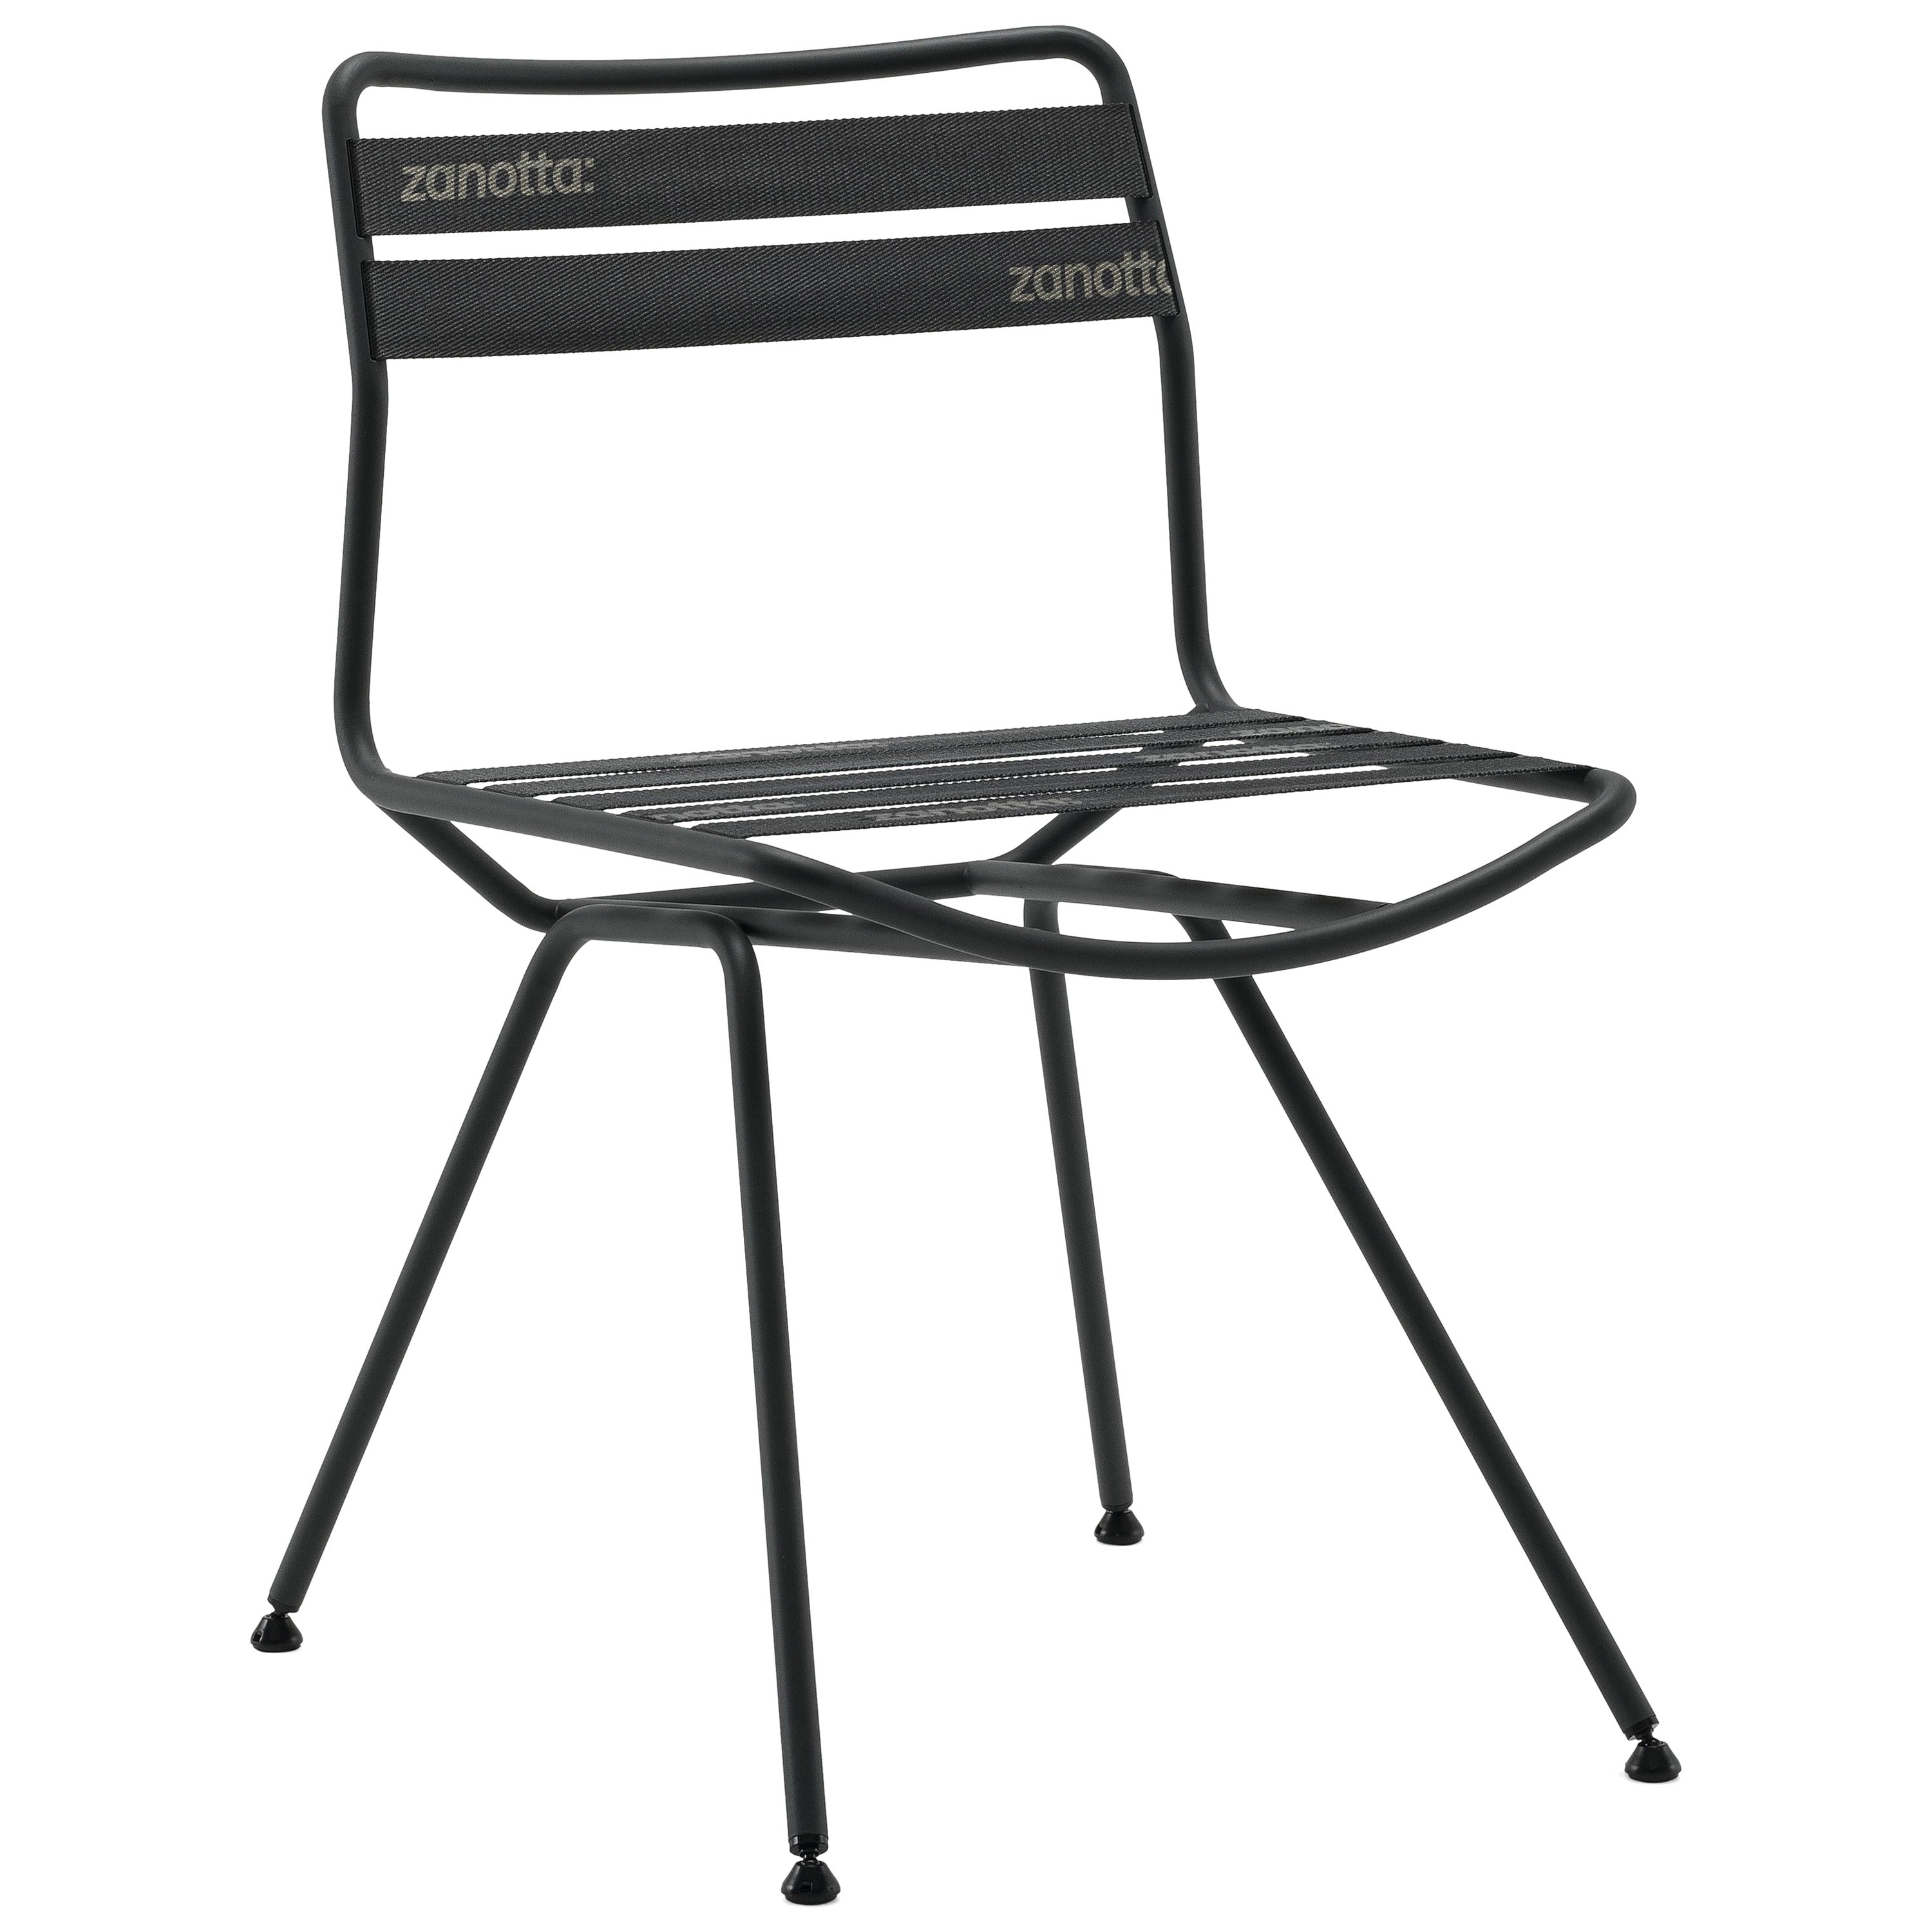 Zanotta Dan Chair in Anthracite Elastic Seat & Back with Matt Black Steel Frame